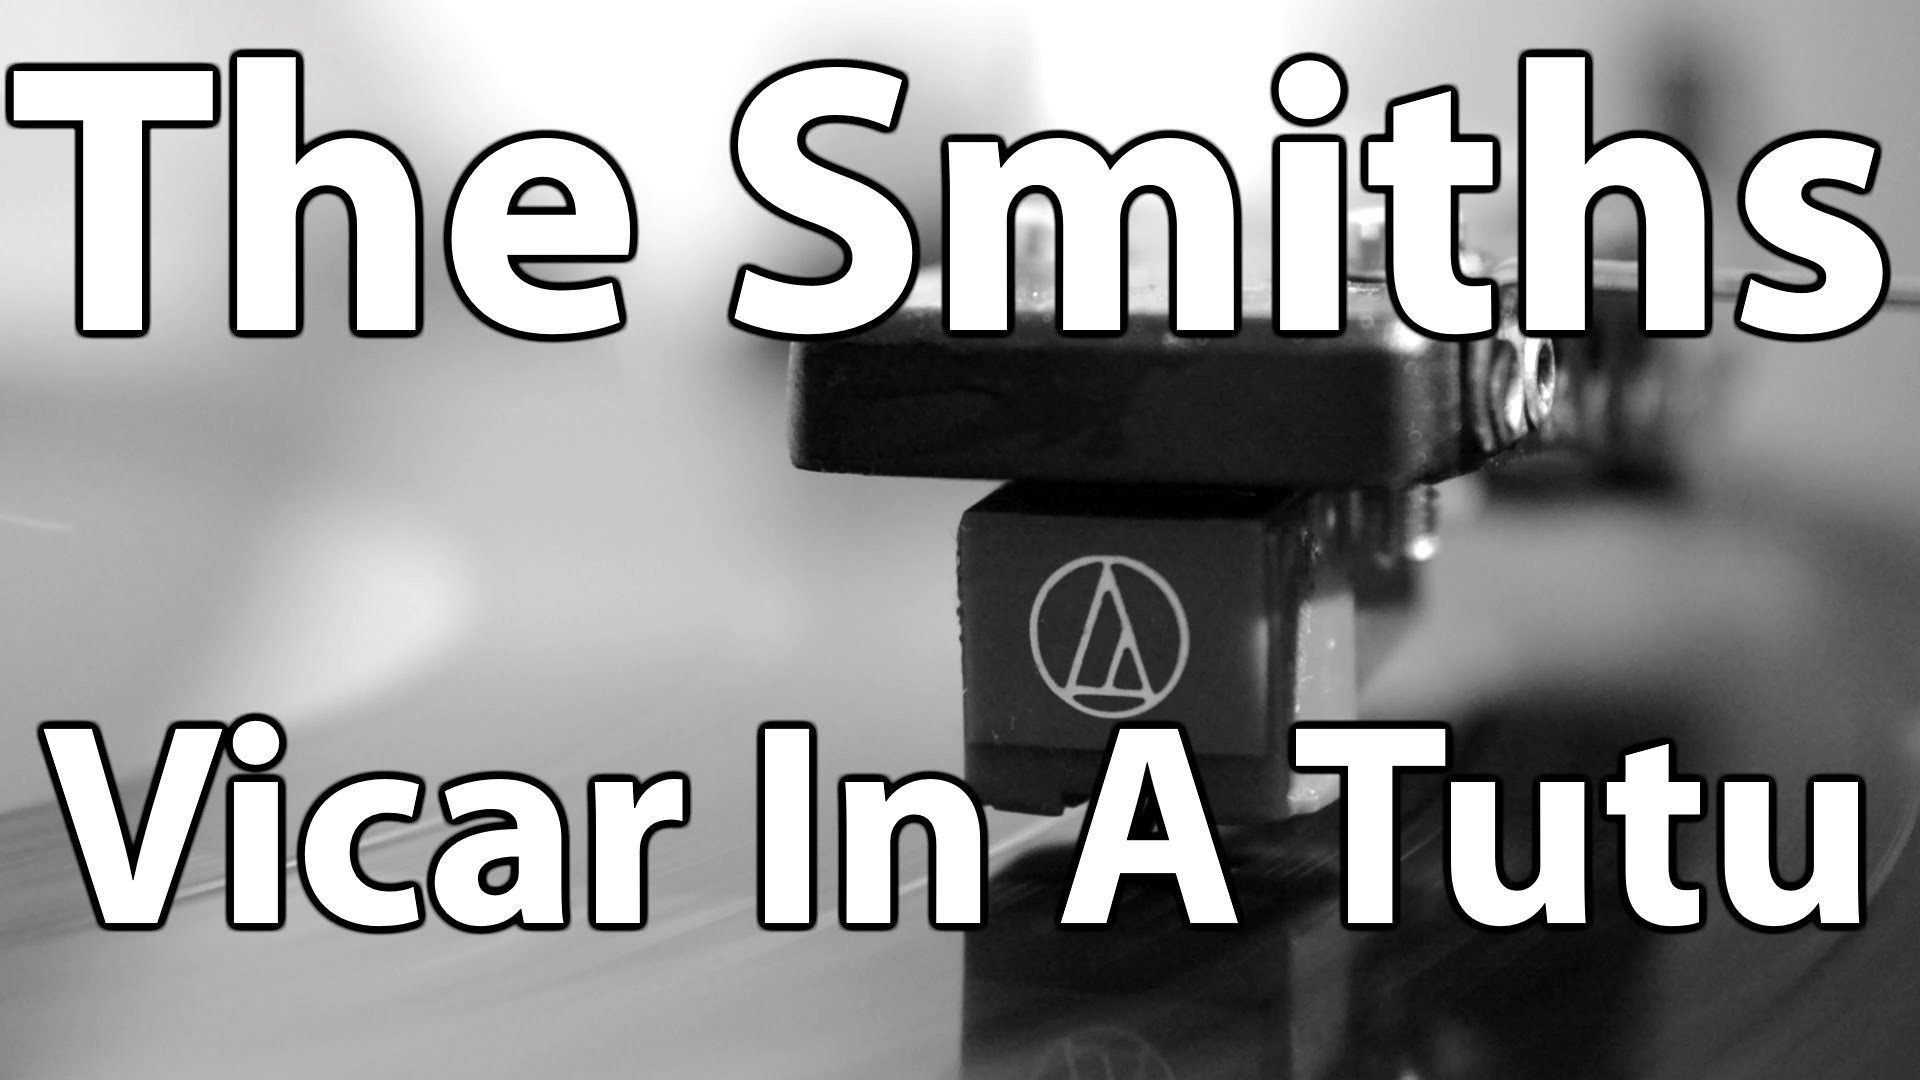 Vicar In A Tutu – The Smiths on Vinyl